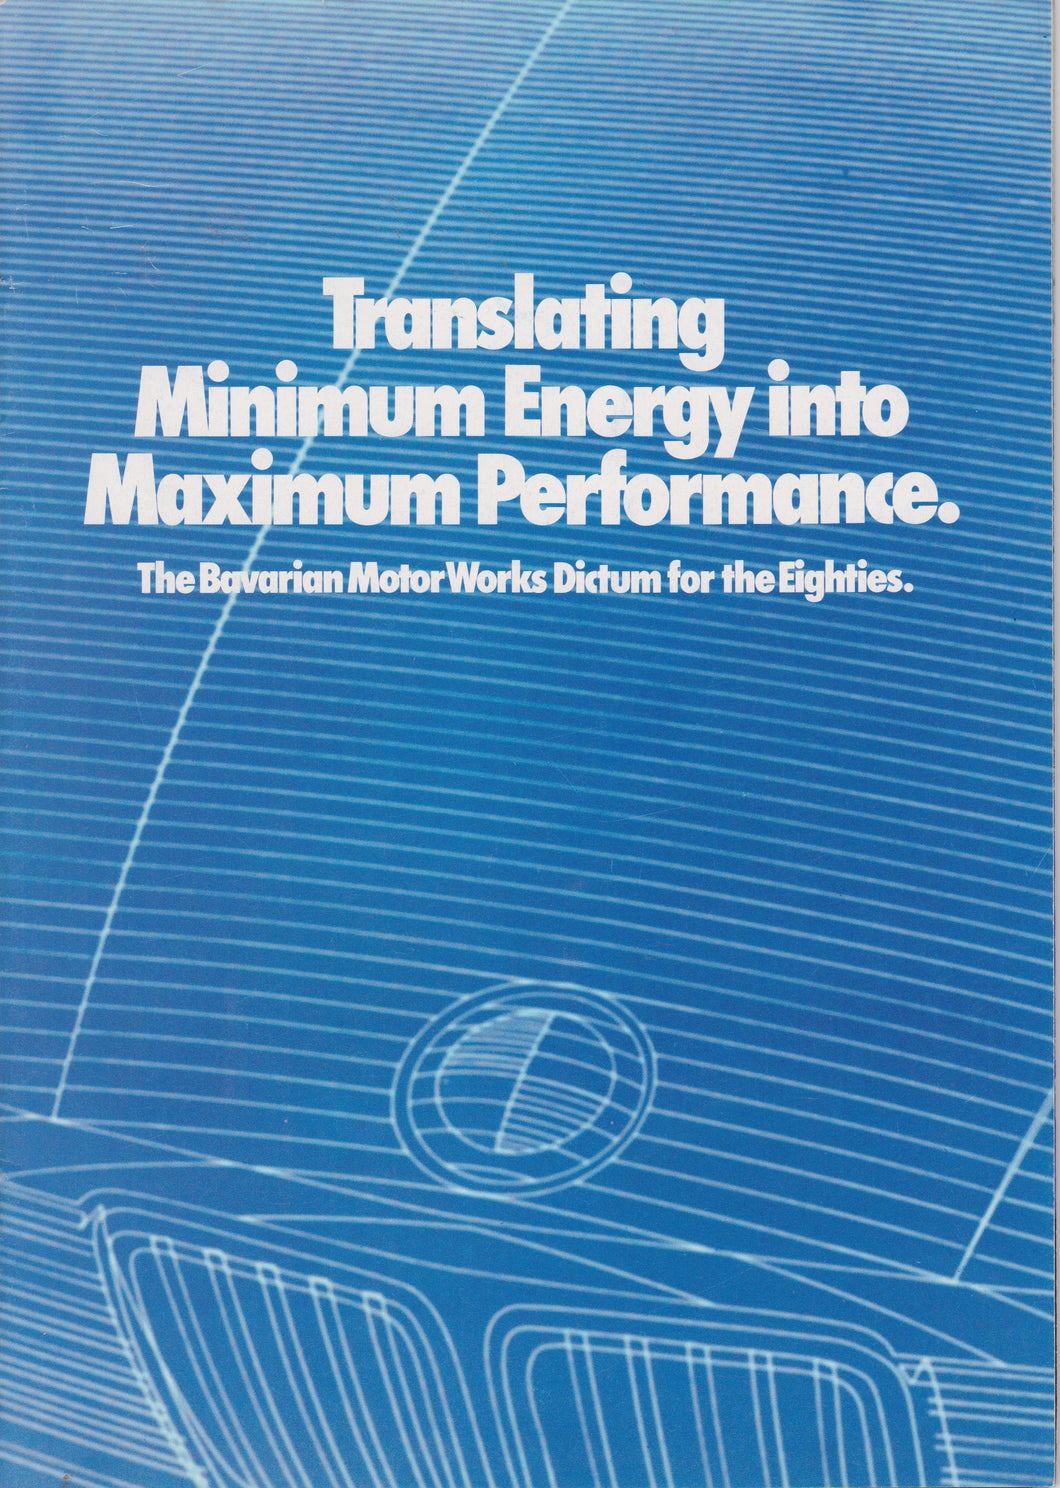 Brochure - Translating Minimum Energy into Maximum Performance.